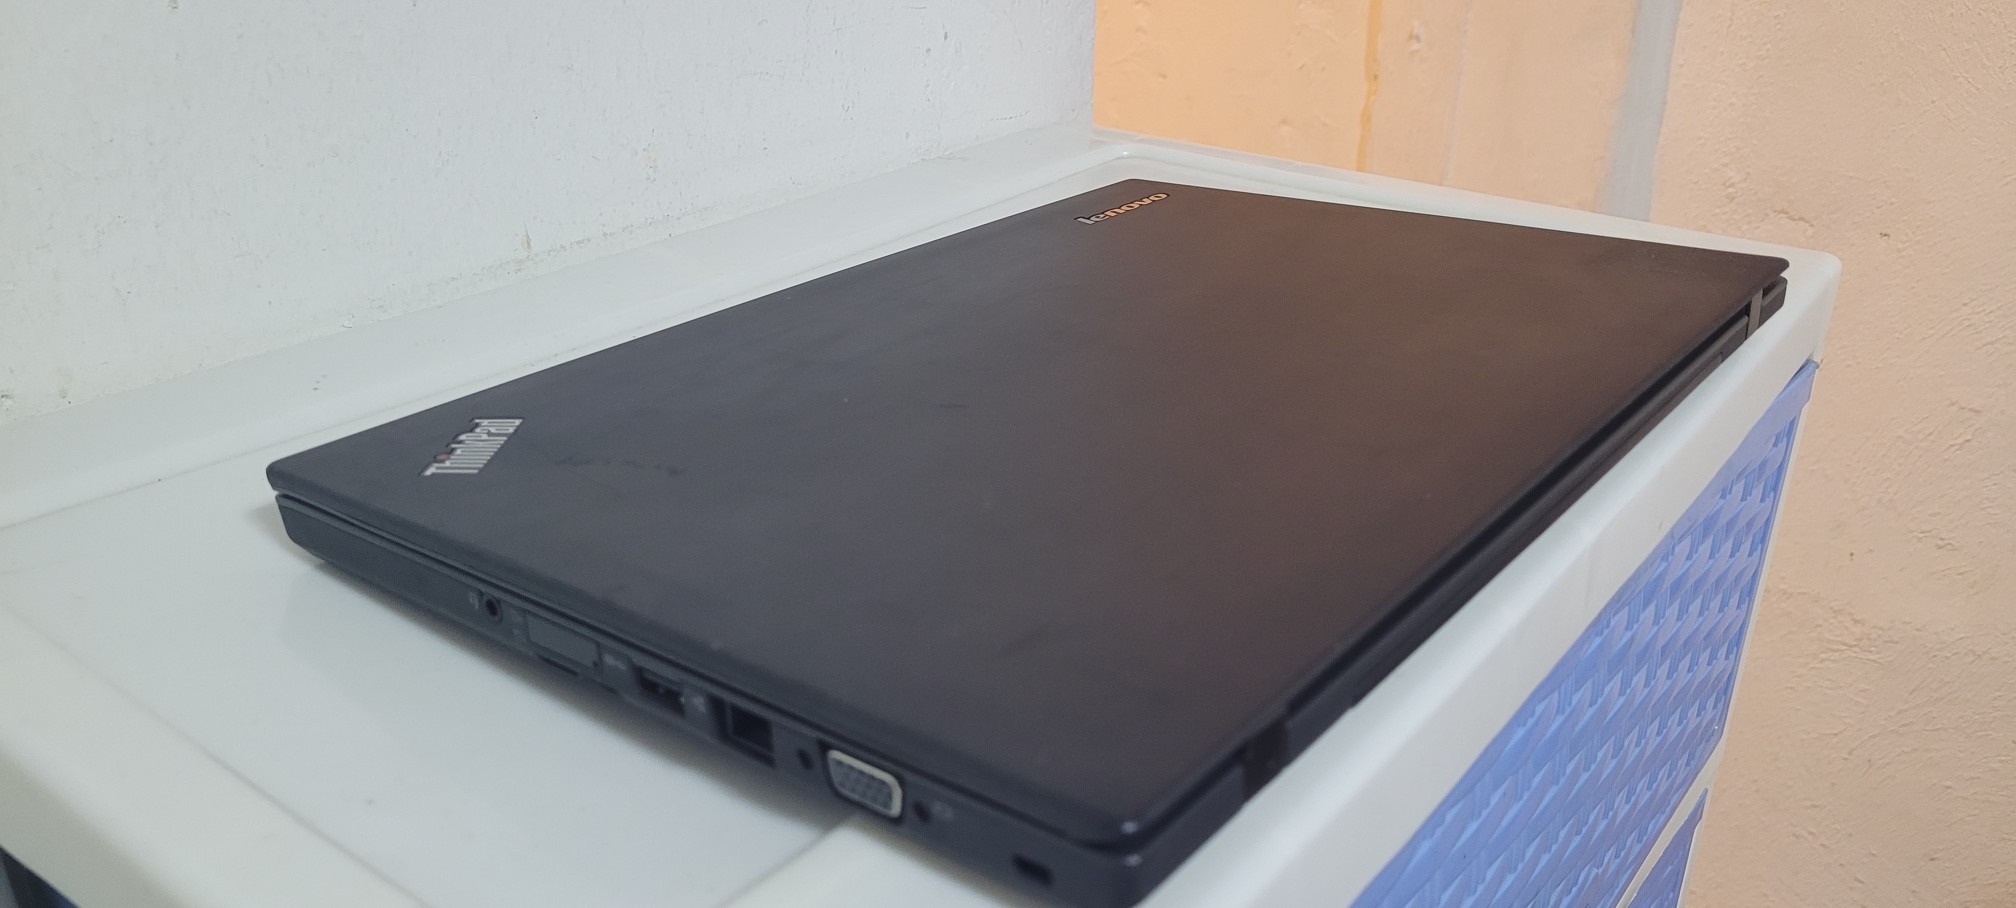 computadoras y laptops - Laptop Lenovo t450 14 Pulg Core i5 Ram 16gb Video 8gb Disponible 2